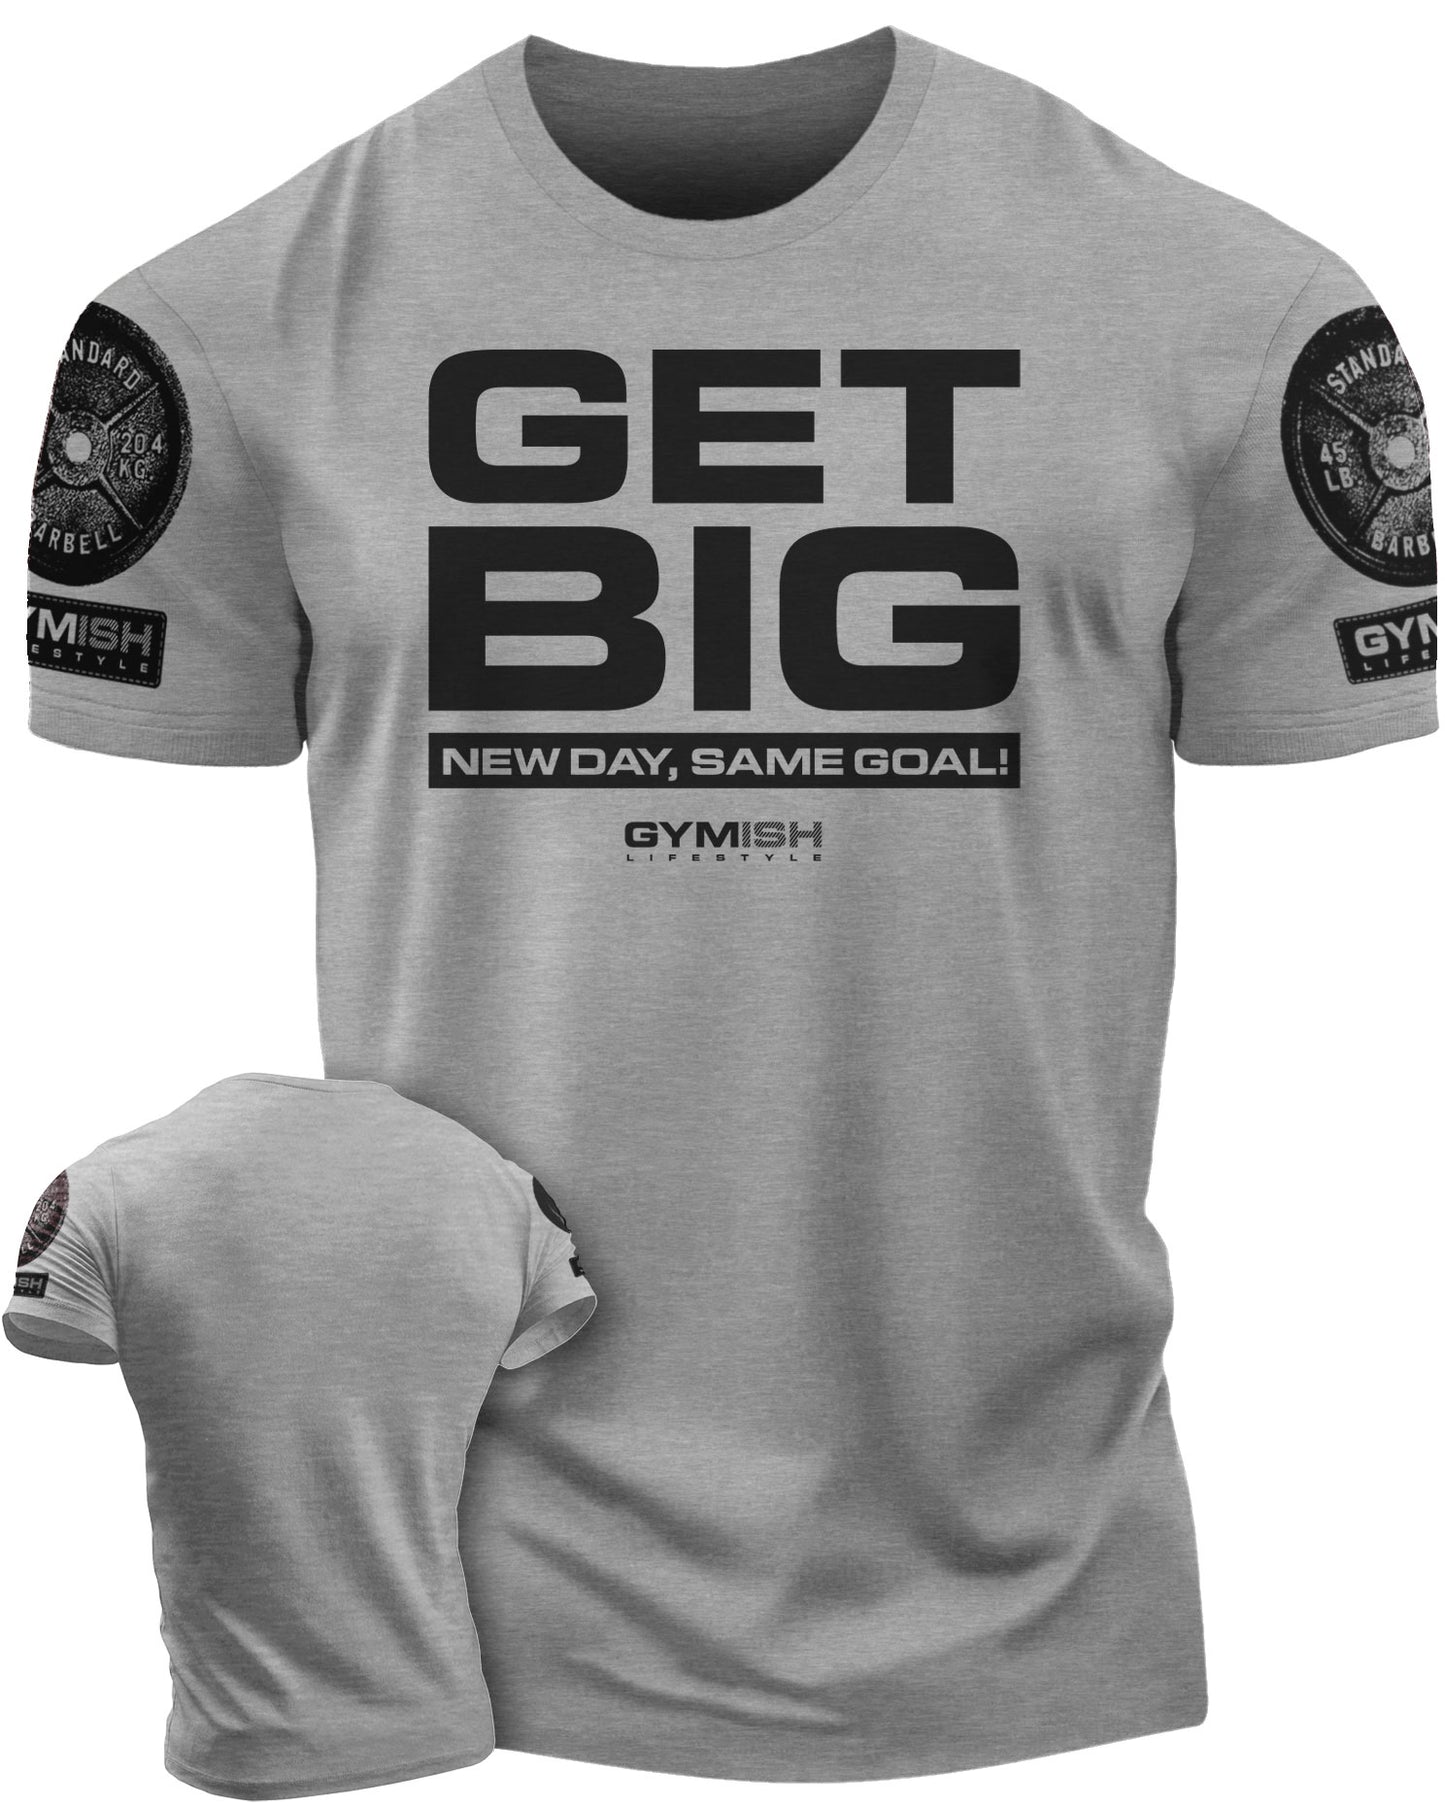 063. Get Big Workout T-Shirt